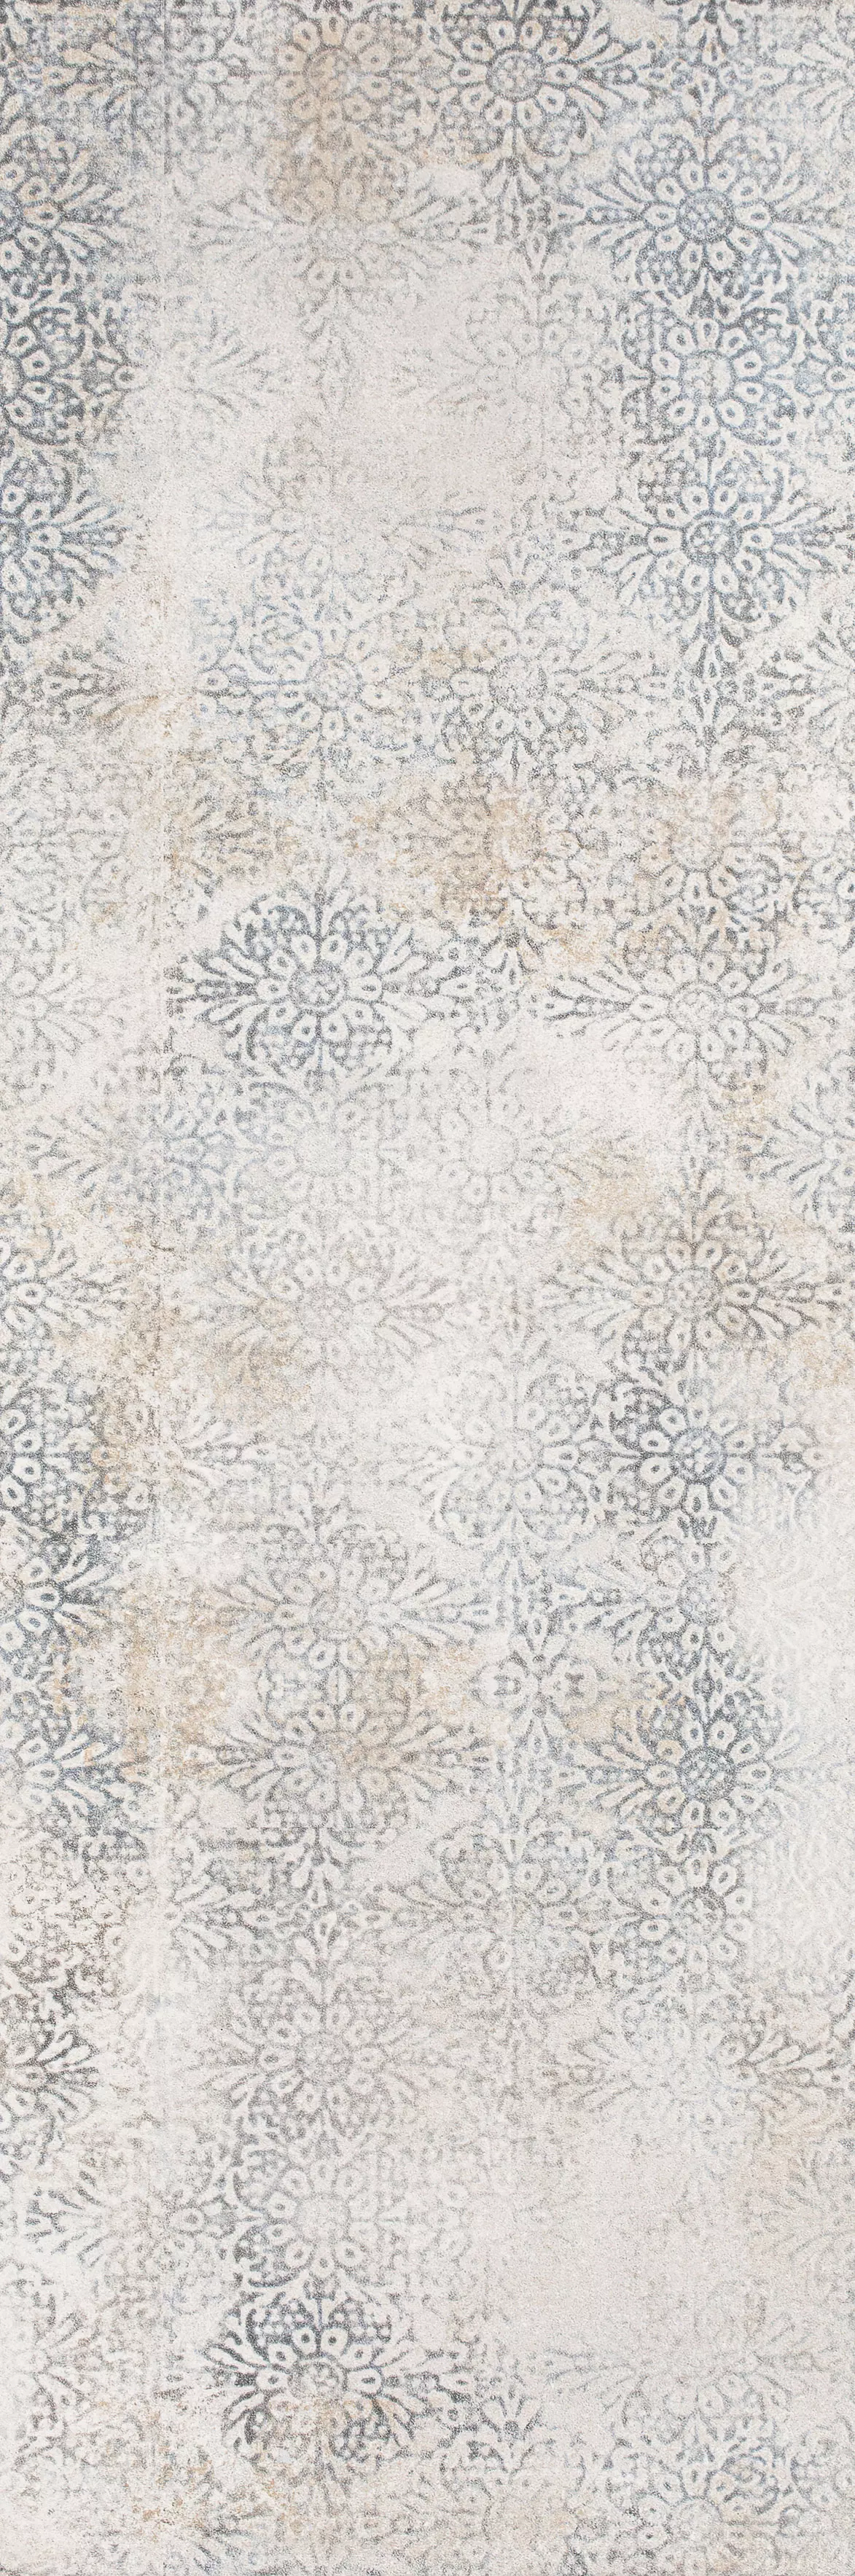 INDUSTRIAL CHIC Grys Carpet falburkoló dekor 29,8x89,8x0,9 cm